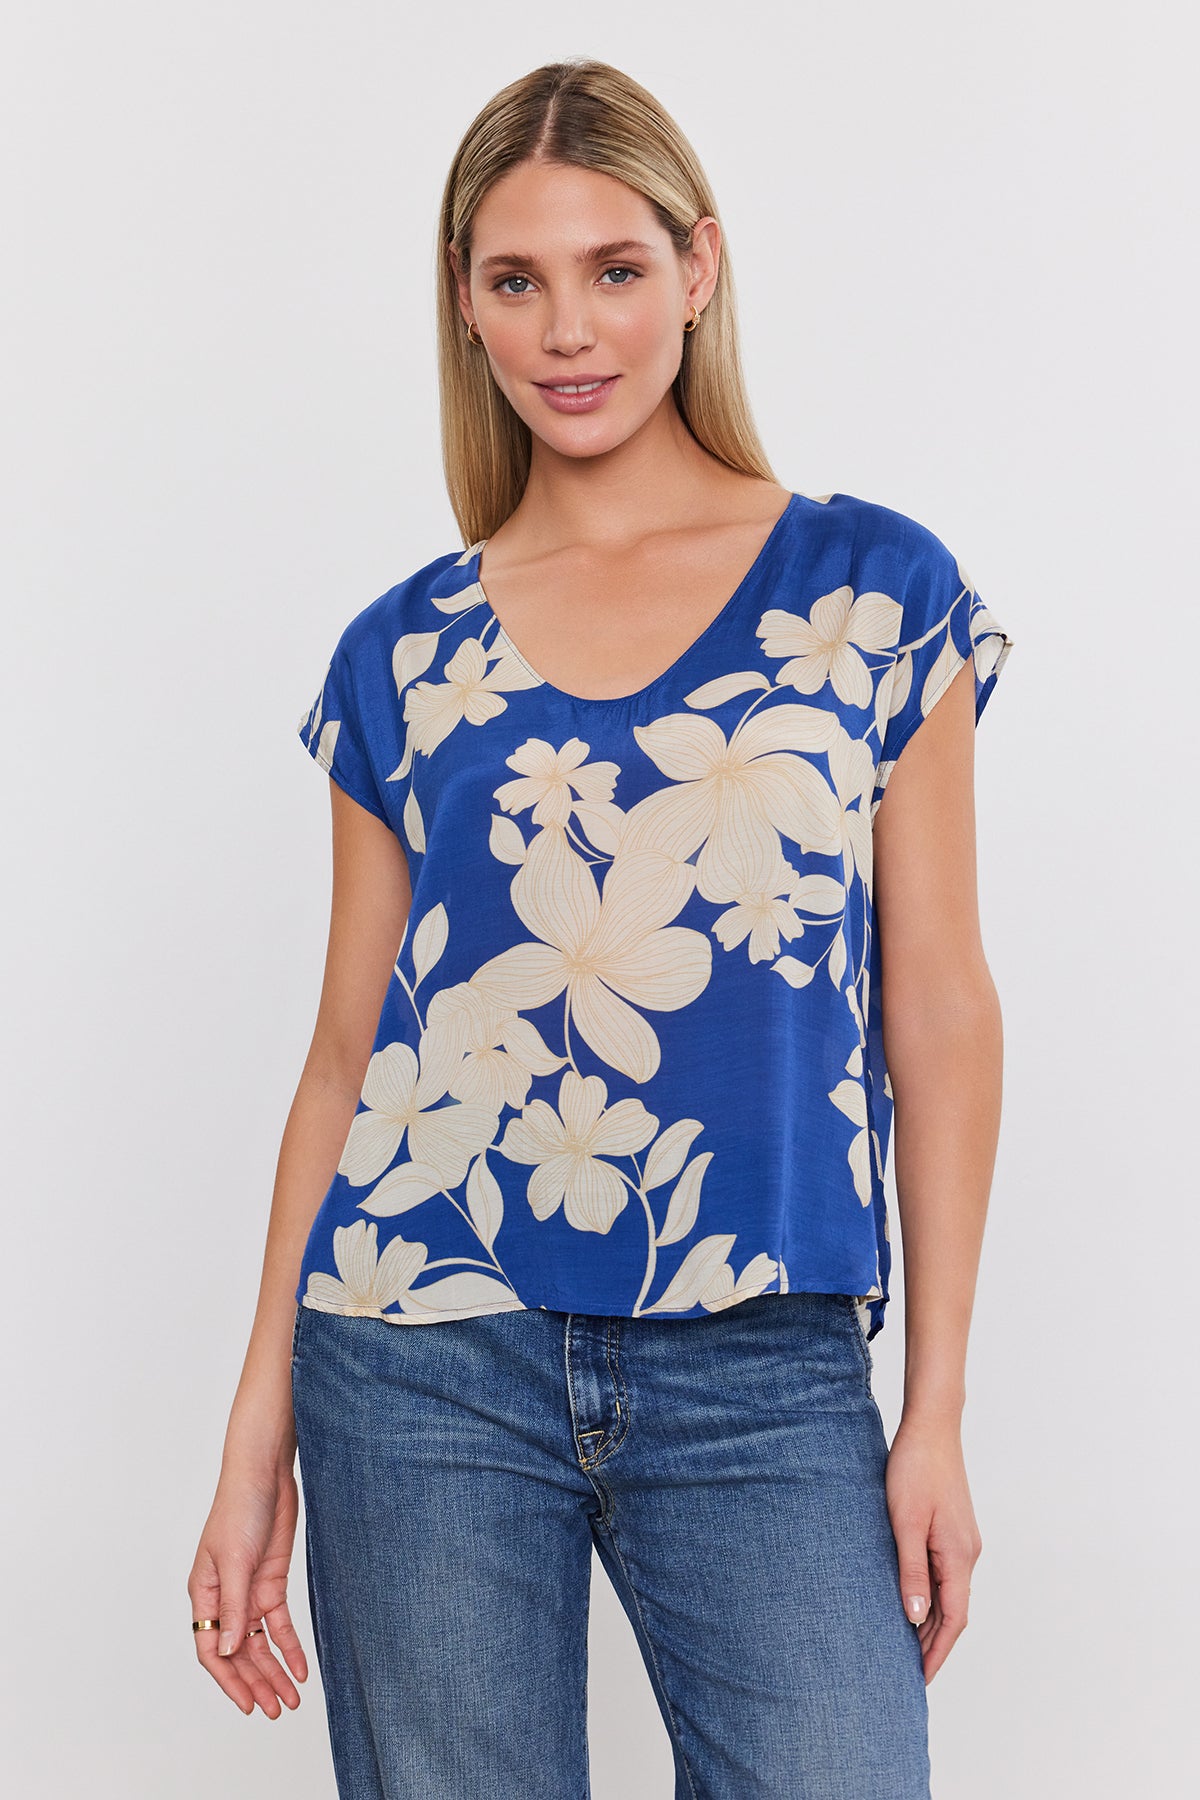   A model wearing a Velvet by Graham & Spencer blue floral print top. 